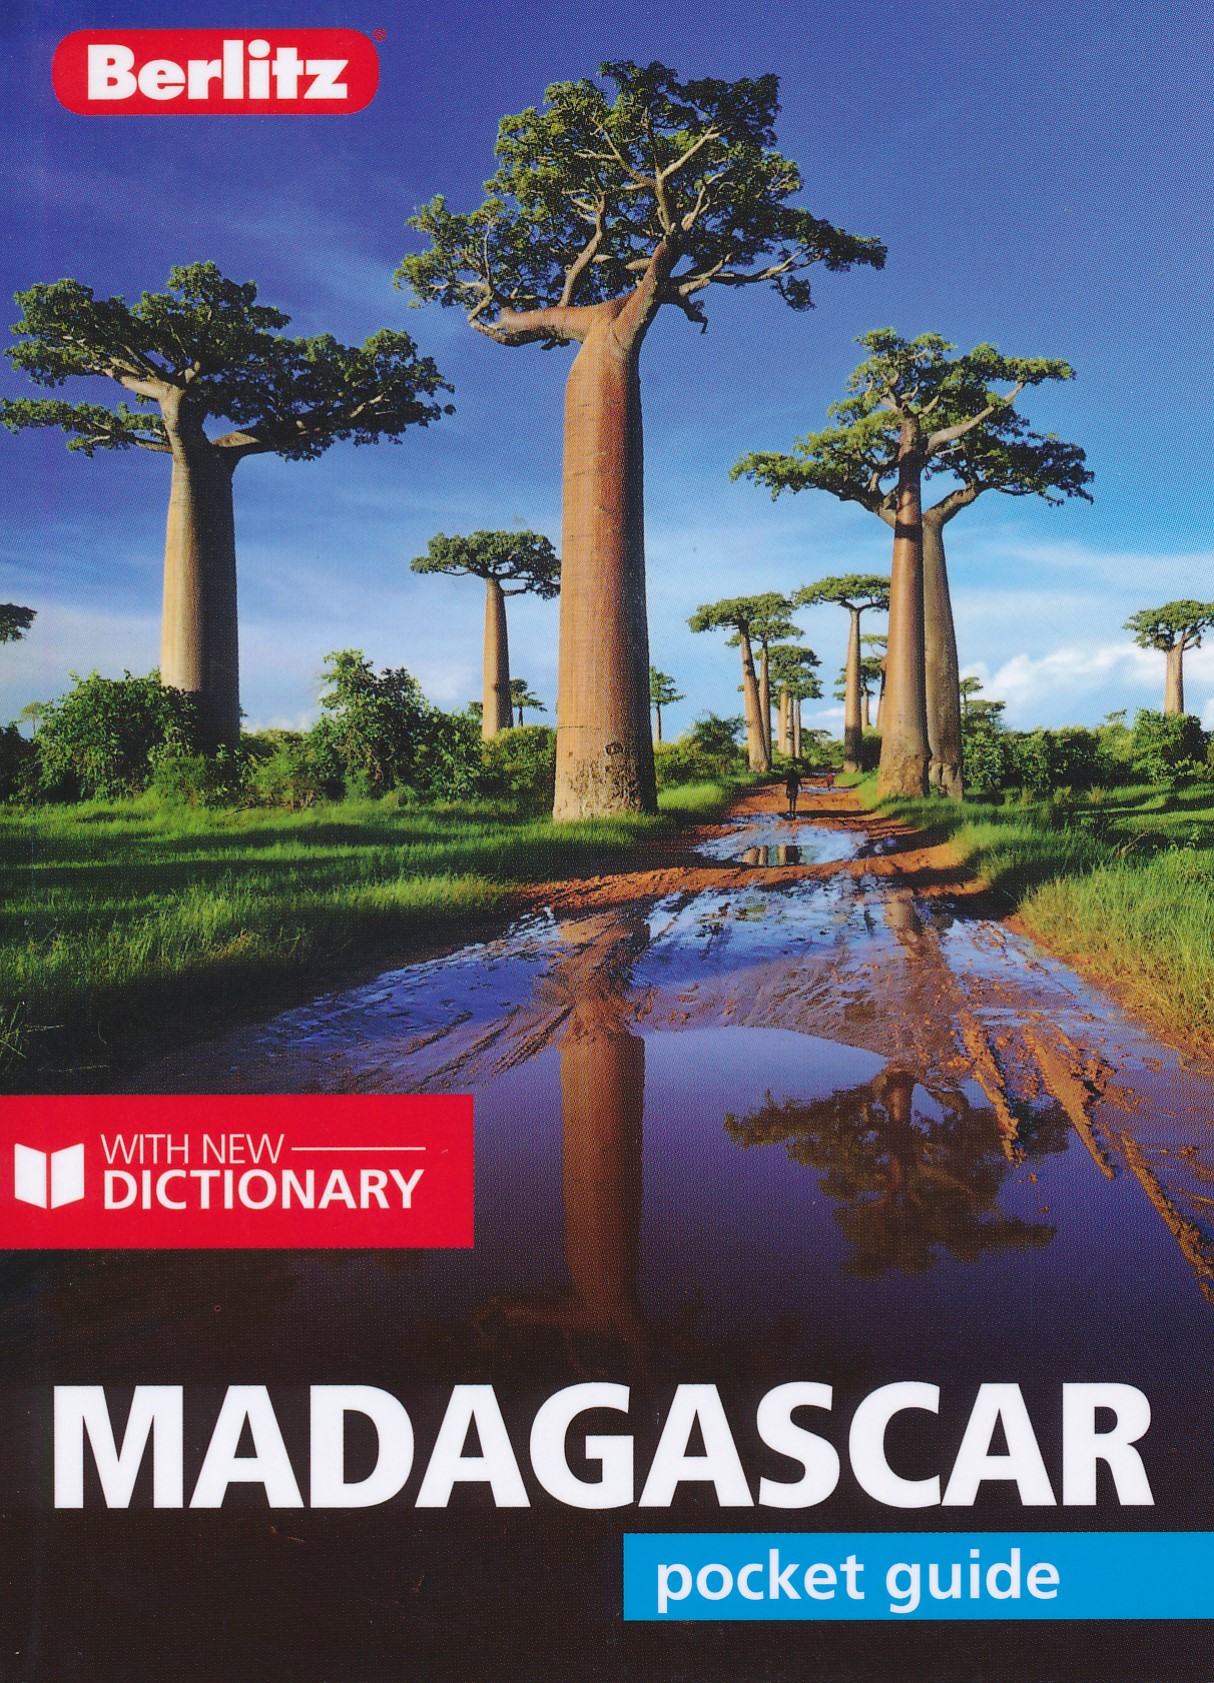 Online bestellen: Reisgids Pocket Guide Madagascar | Berlitz